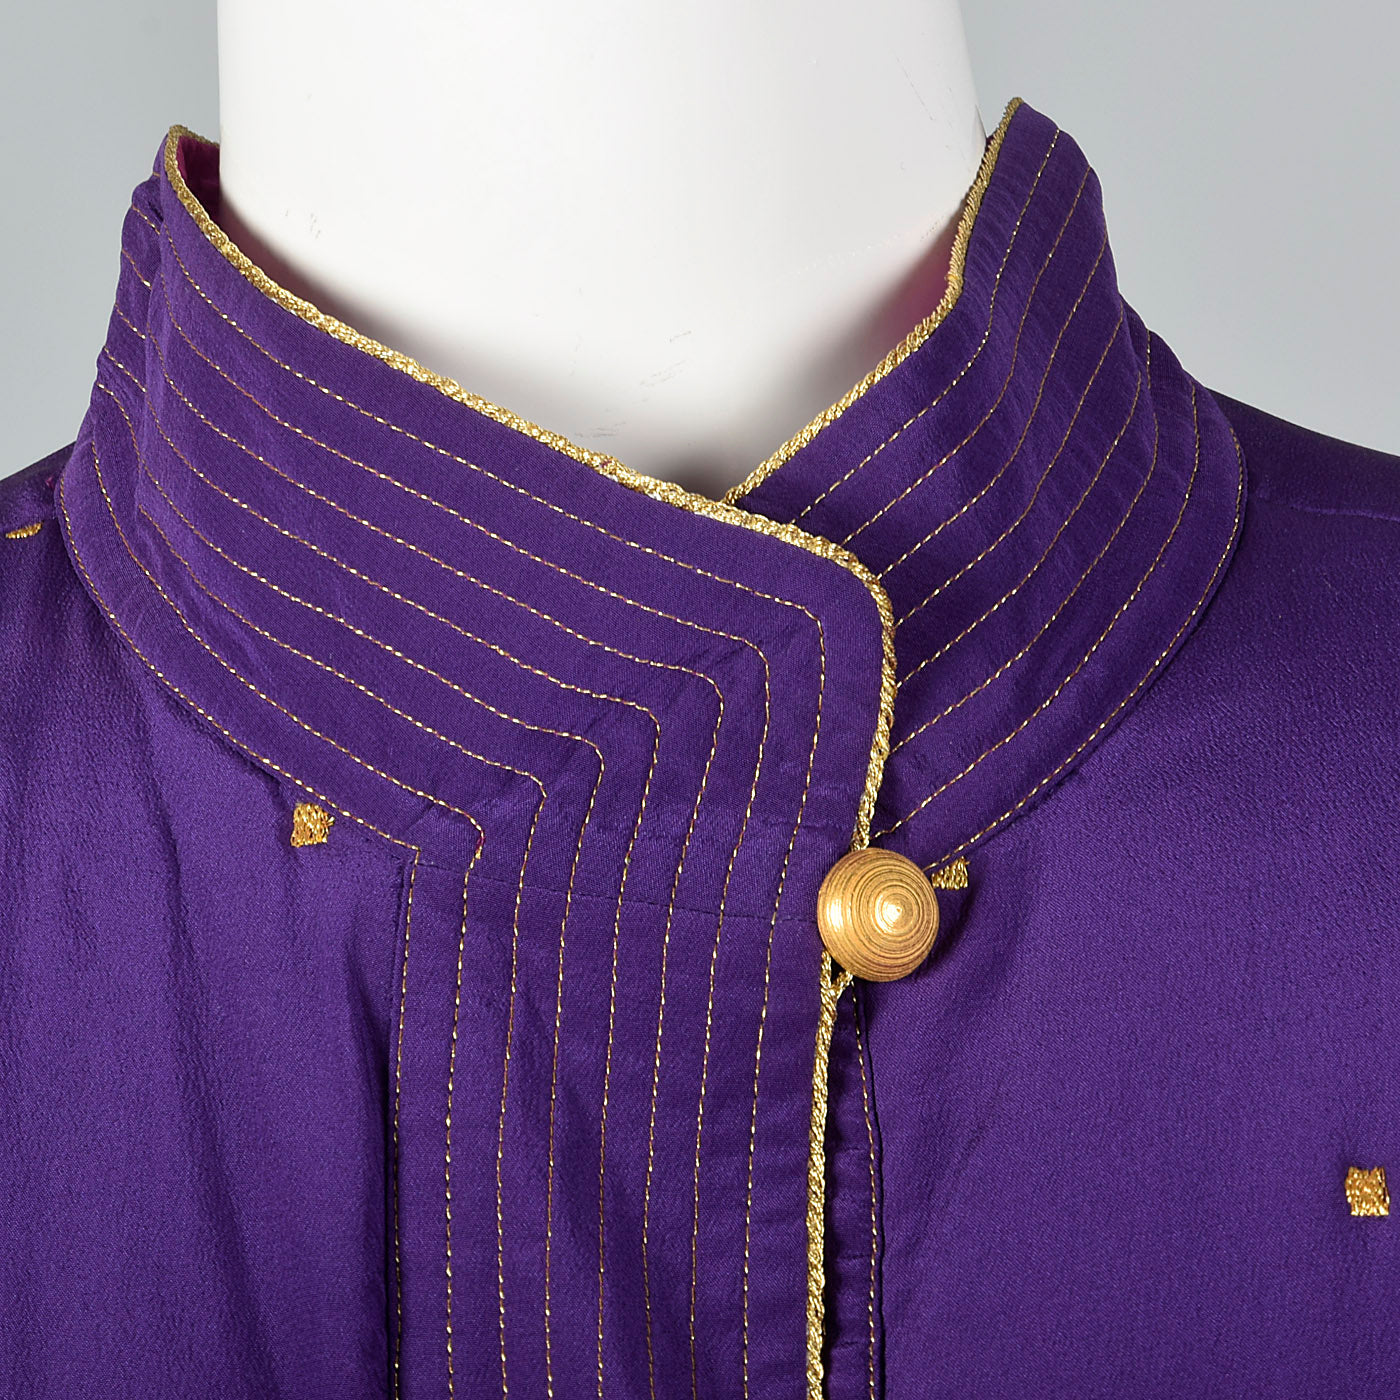 1990s Ellen Tracy Purple Silk Jacket with Metallic Gold Details